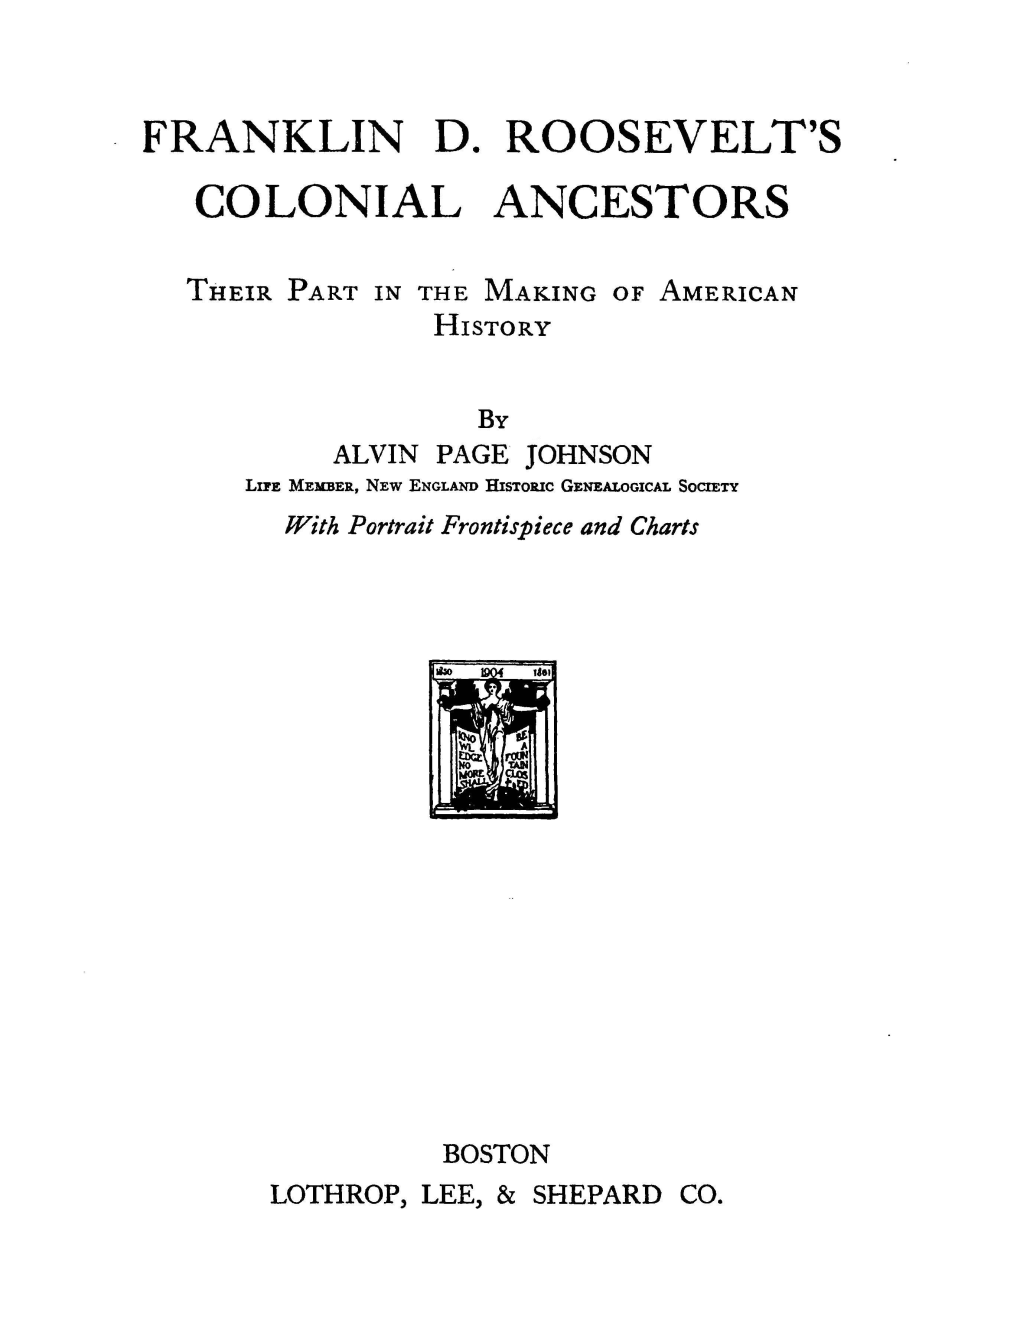 Franklin D. Roosevelt's Colonial Ancestors